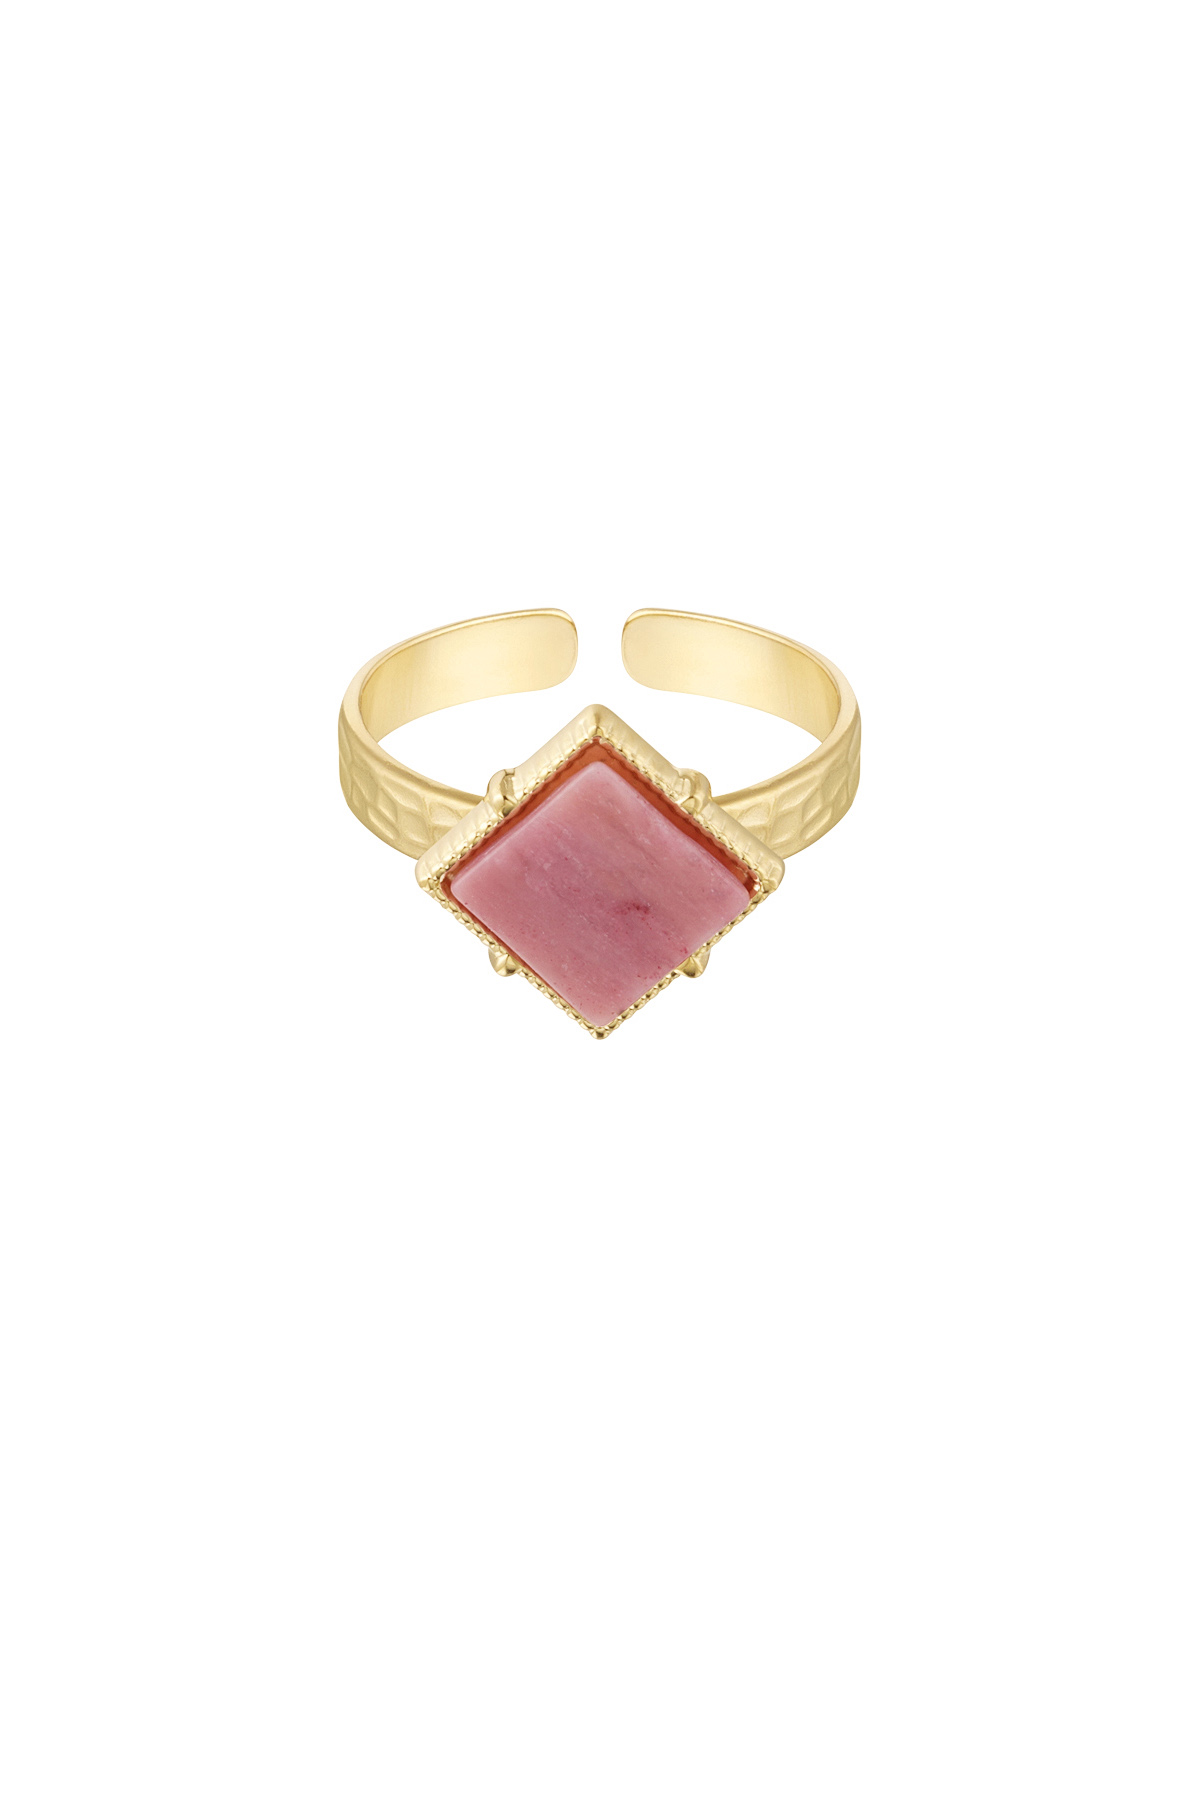 Ring ruit steen - goud/roze 